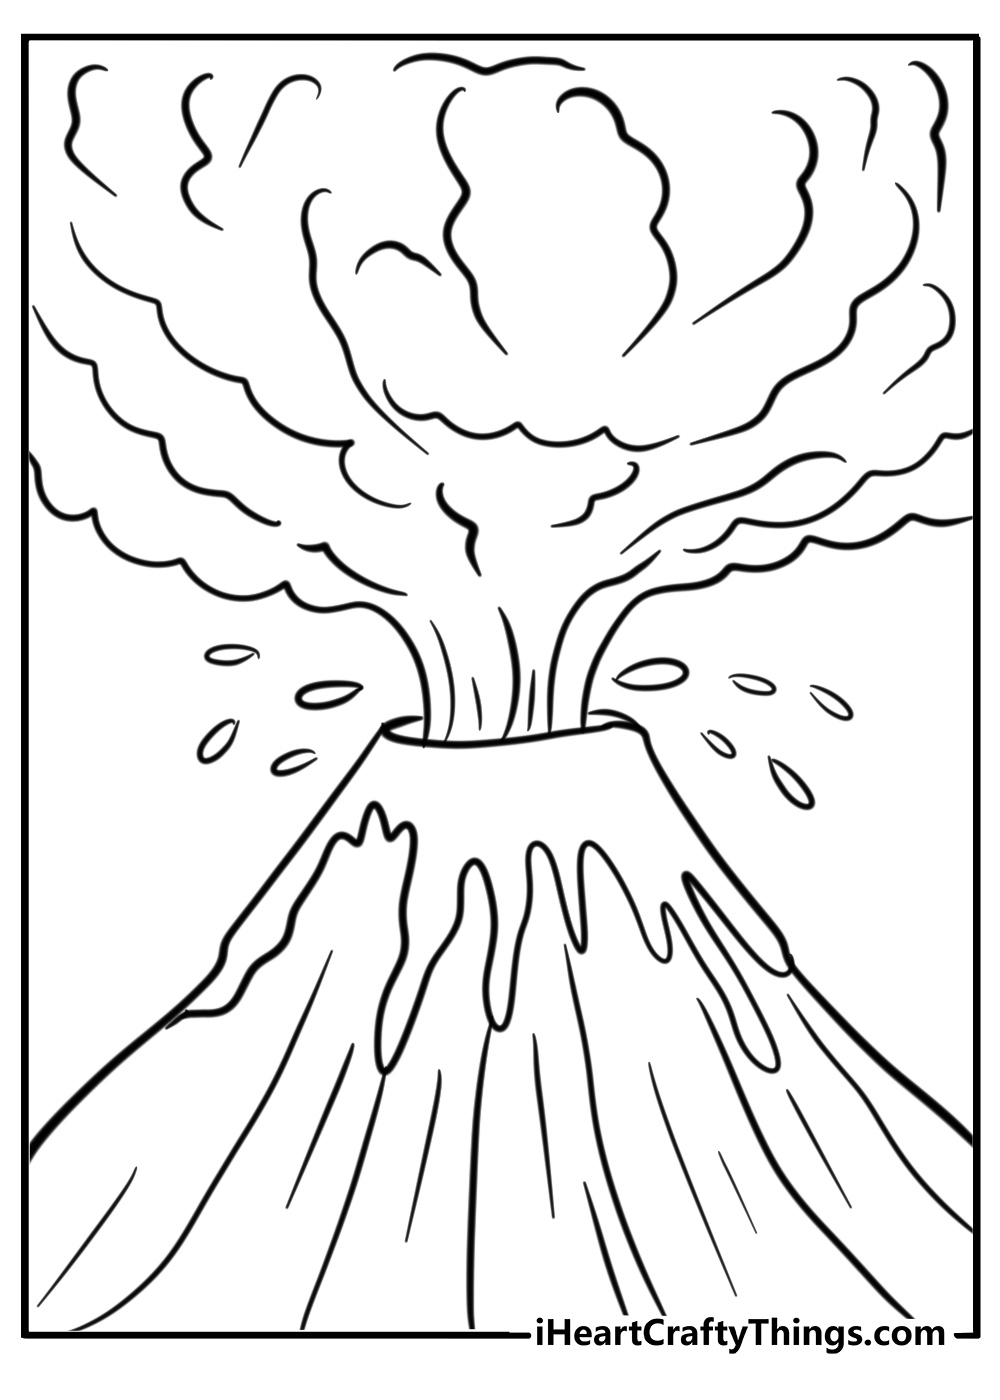 Easy printable of a huge volcano